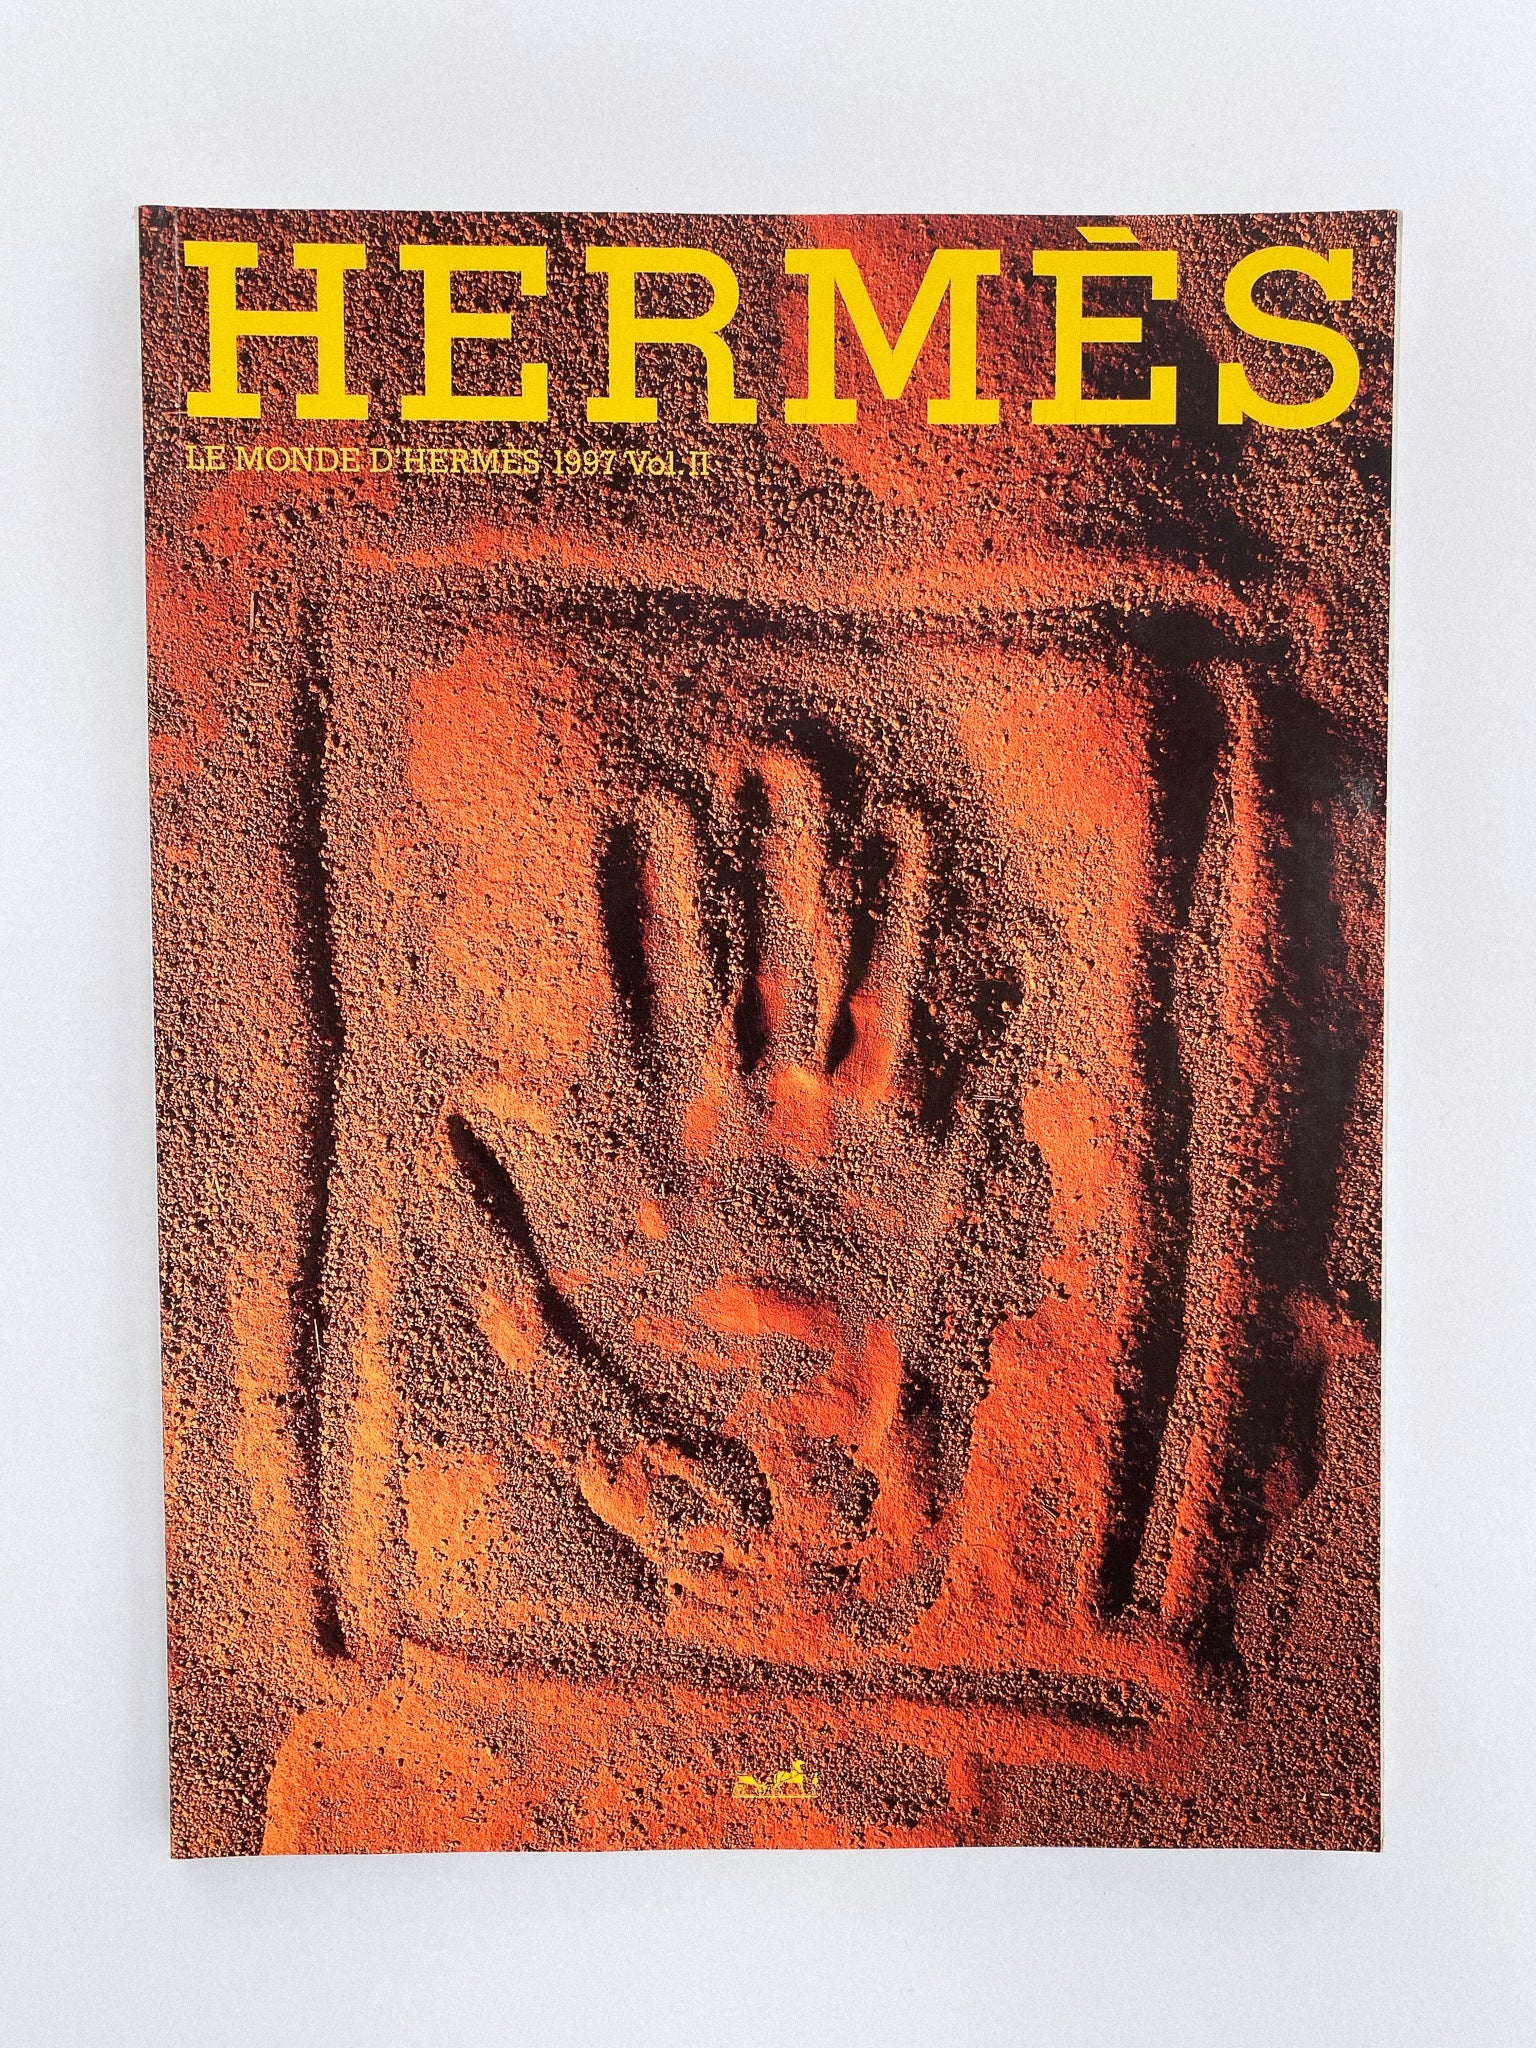 Le Monde d'Hermès N° 31, 1997 Vol. II